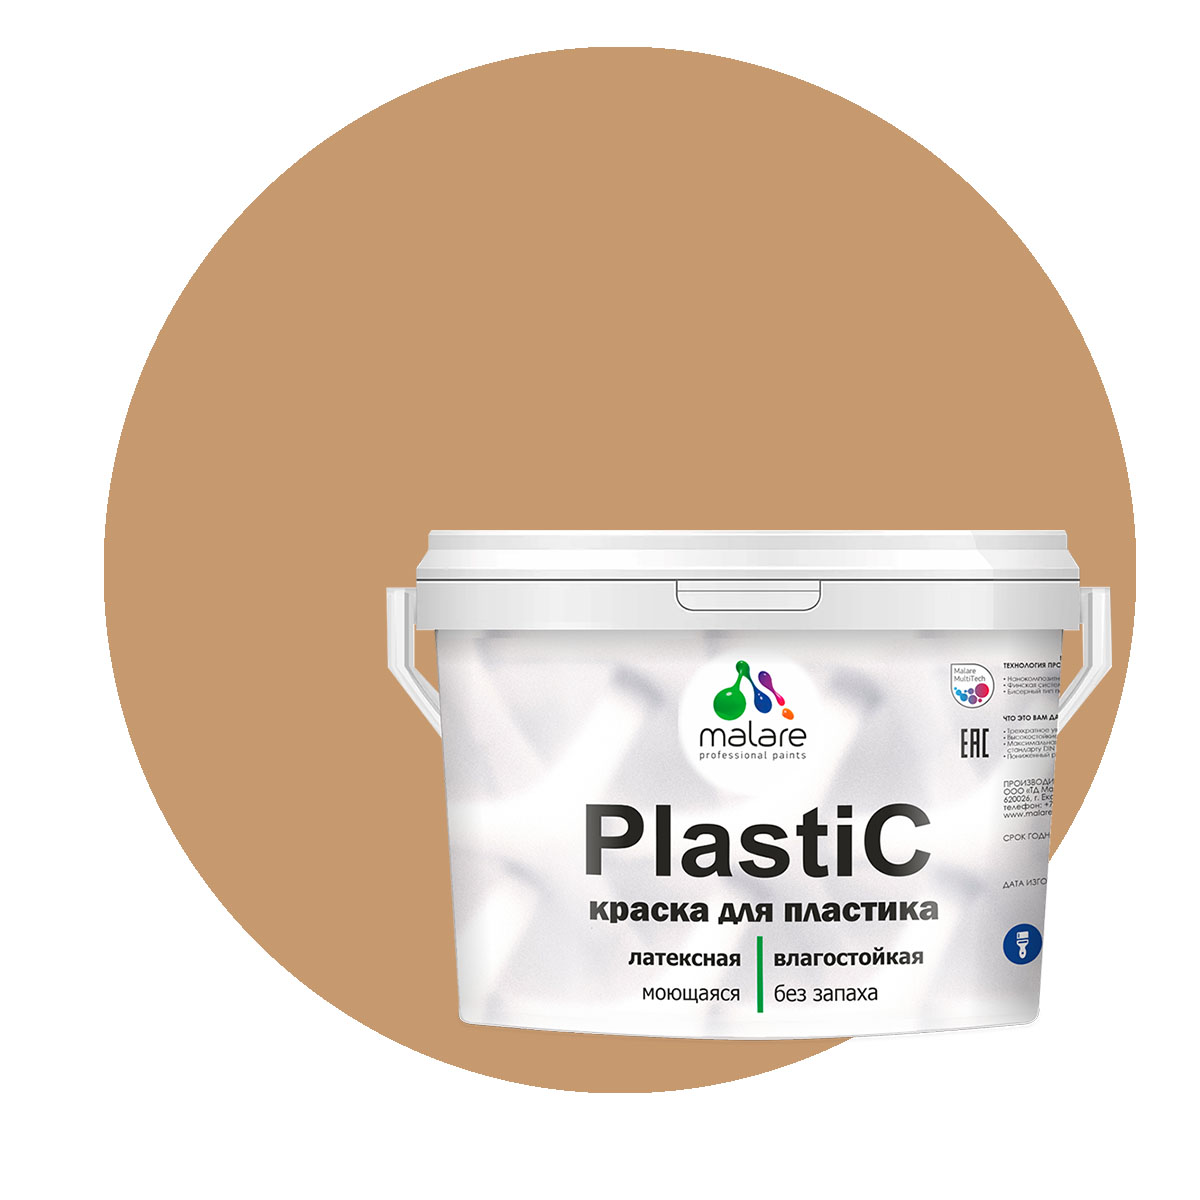 краска malare plastic для пластика пвх для сайдинга летний бриз 1 кг Краска Malare PlastiC для пластика, ПВХ, для сайдинга, молочный шоколад 10 кг.